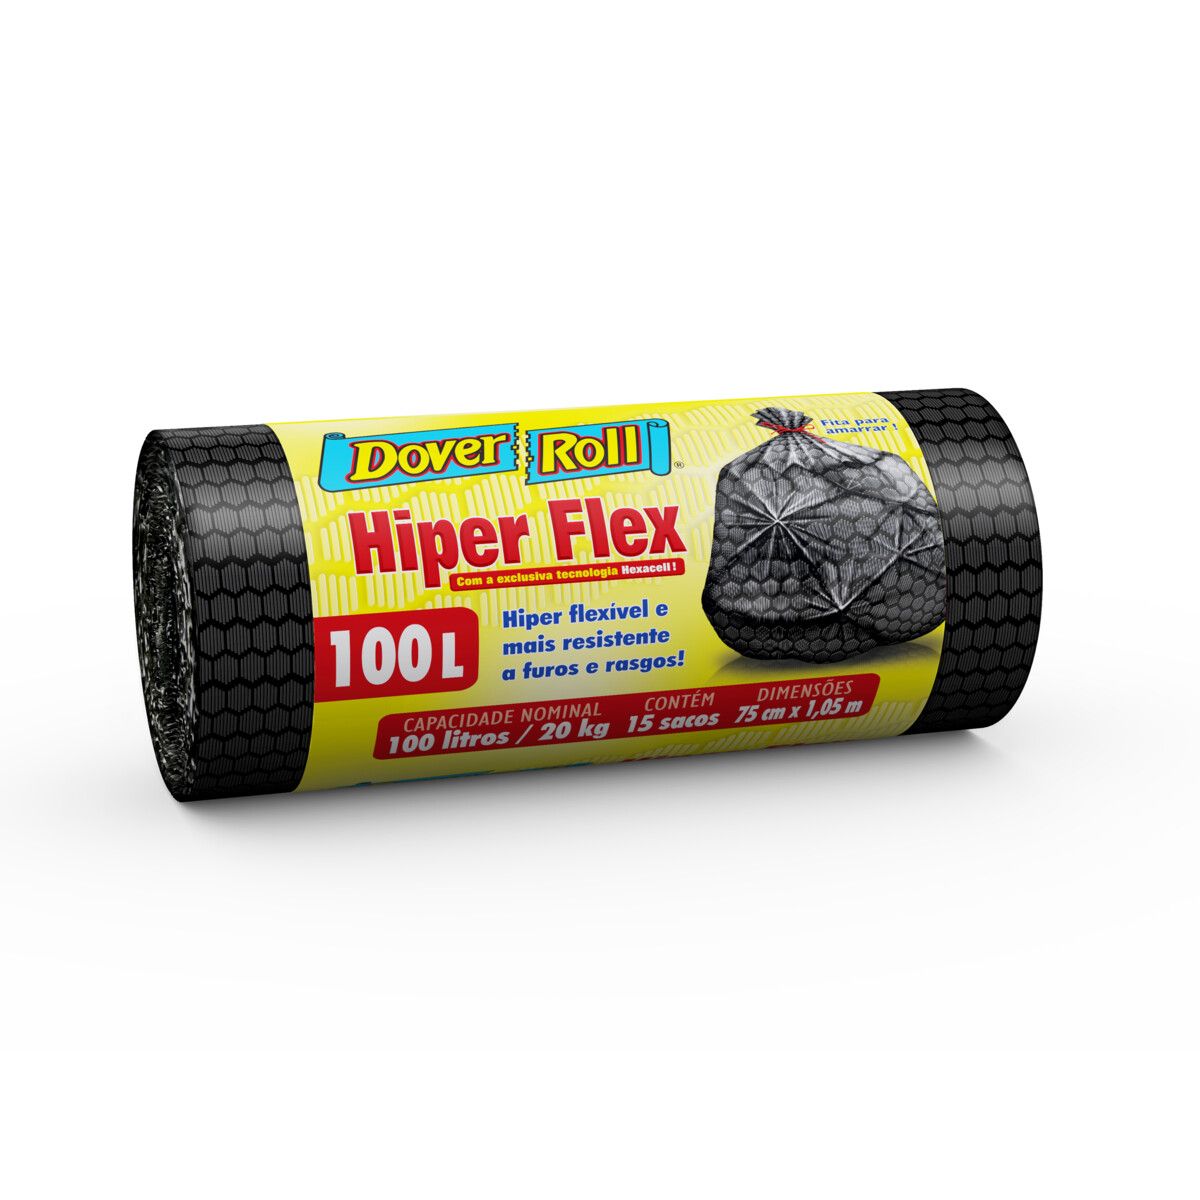 Saco para Lixo Dover Roll 100L Hiper Flex 15 Unidades image number 5